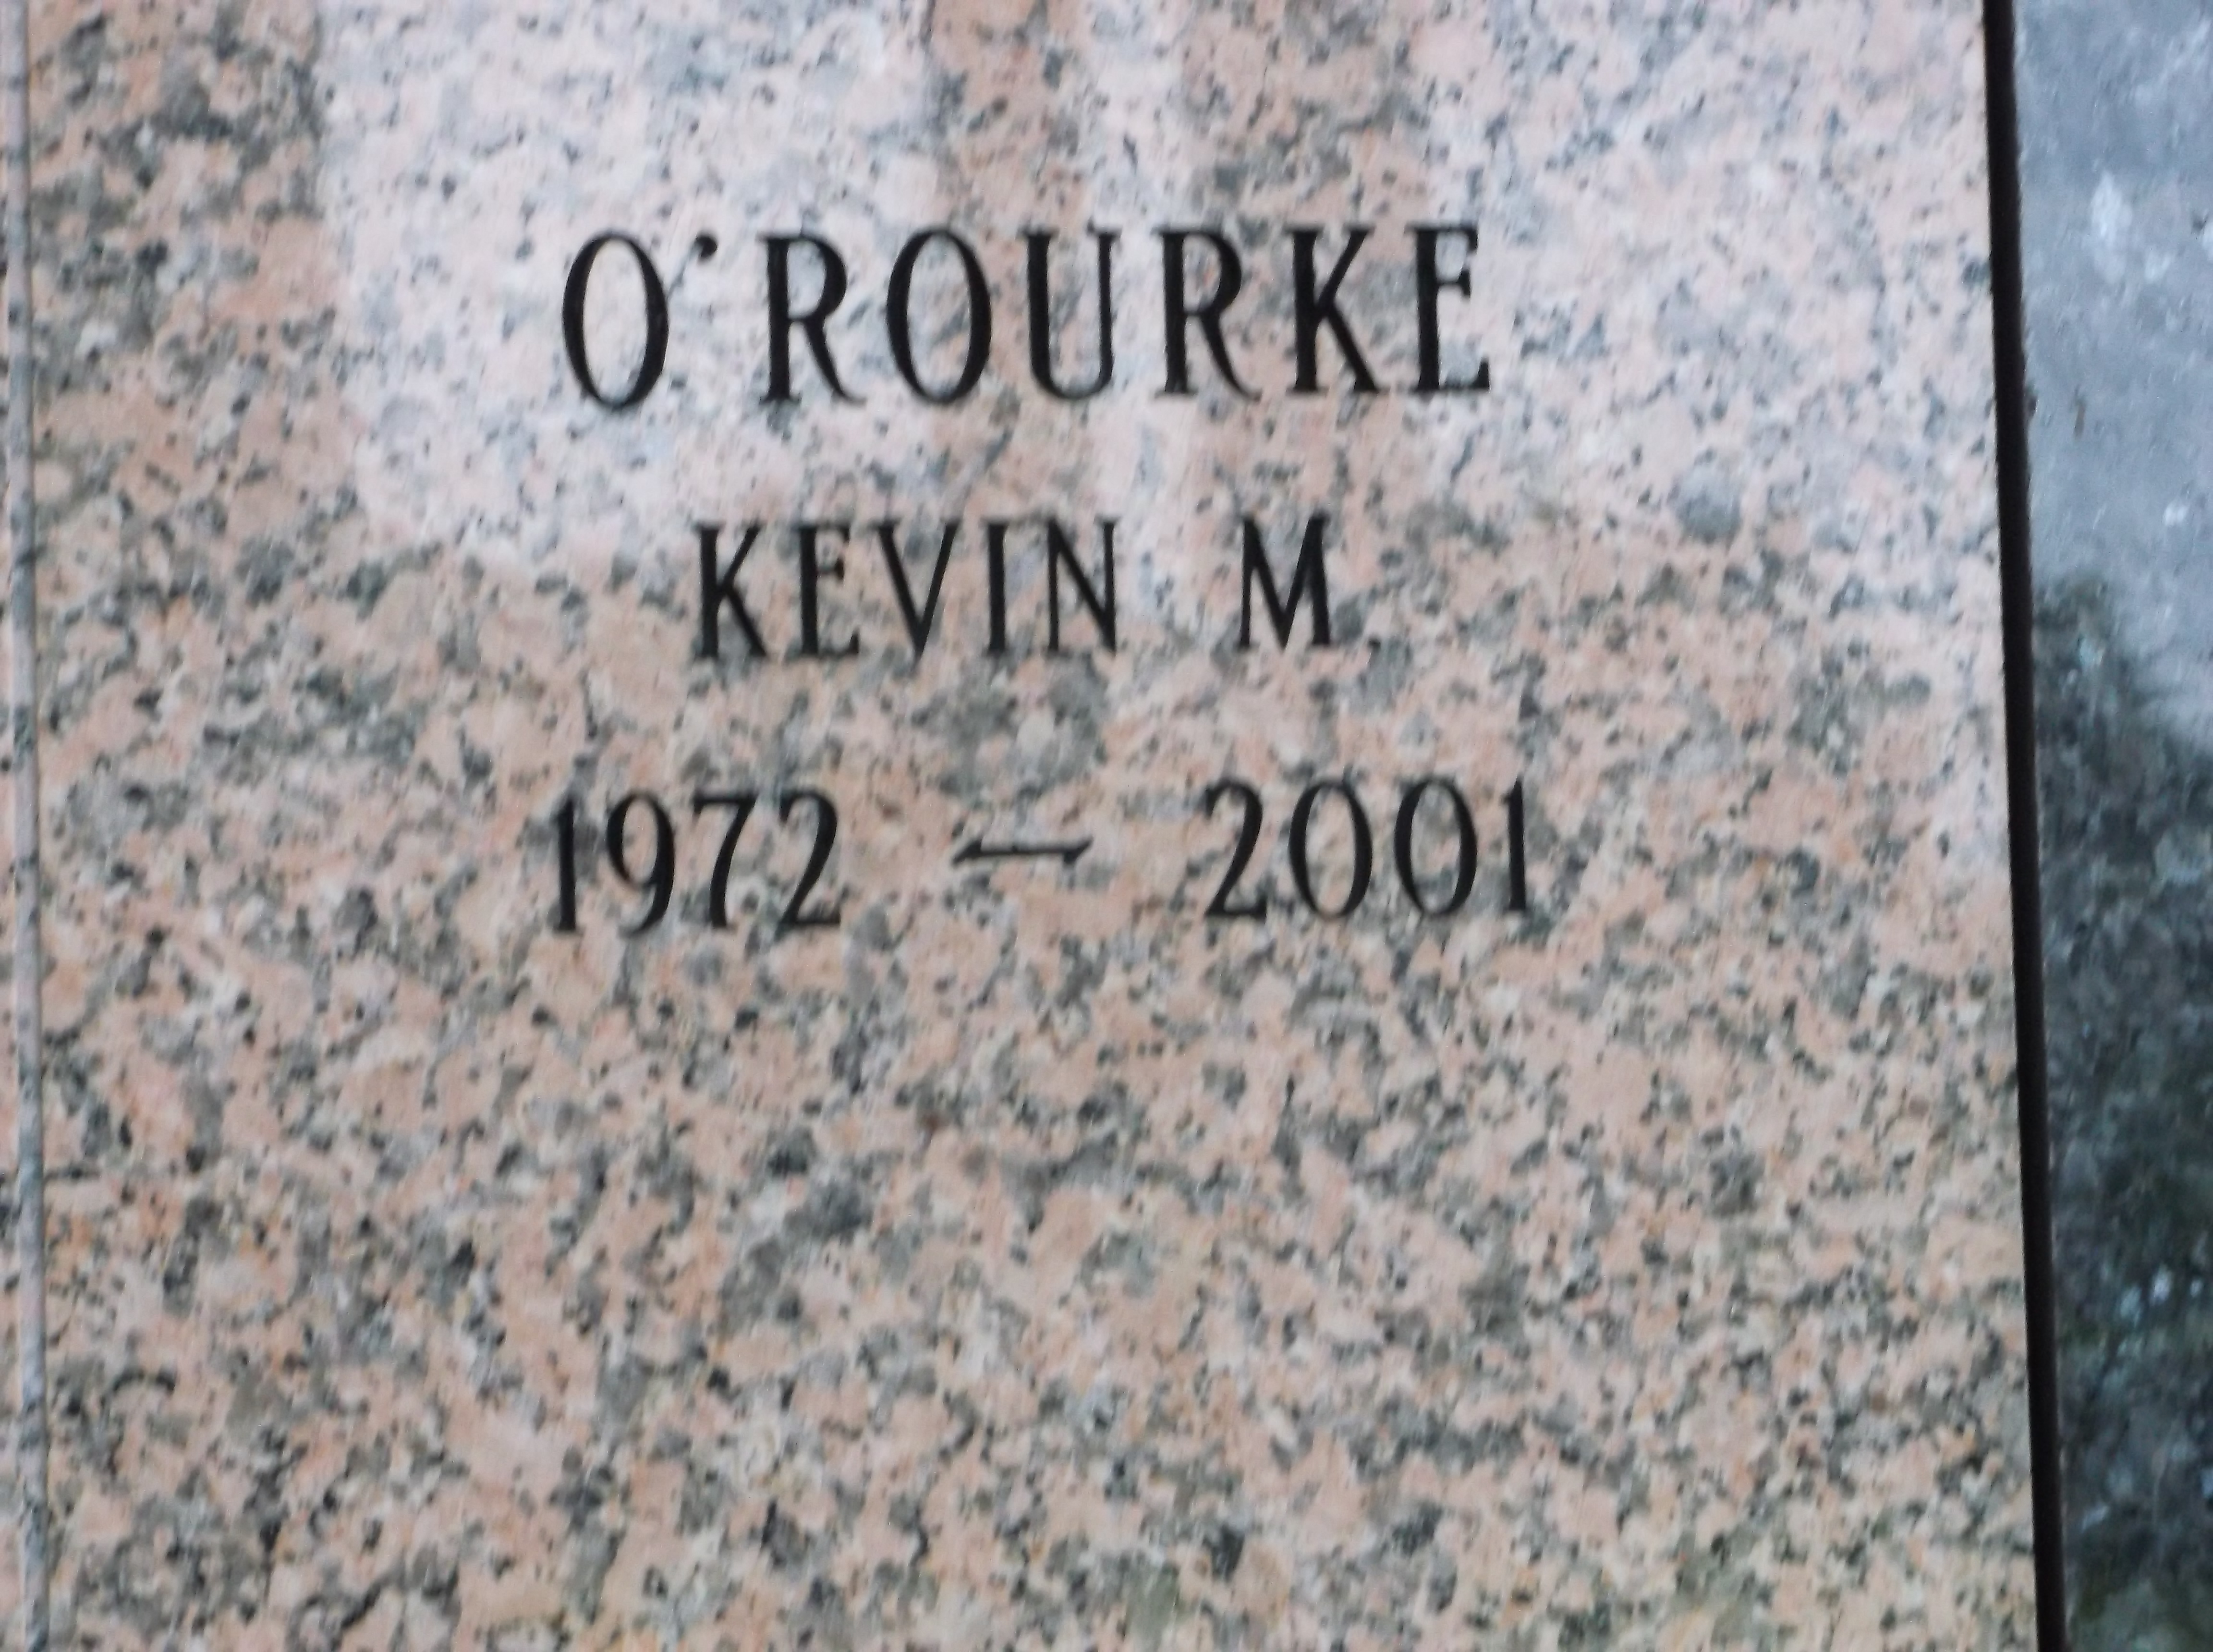 Kevin M O'Rourke